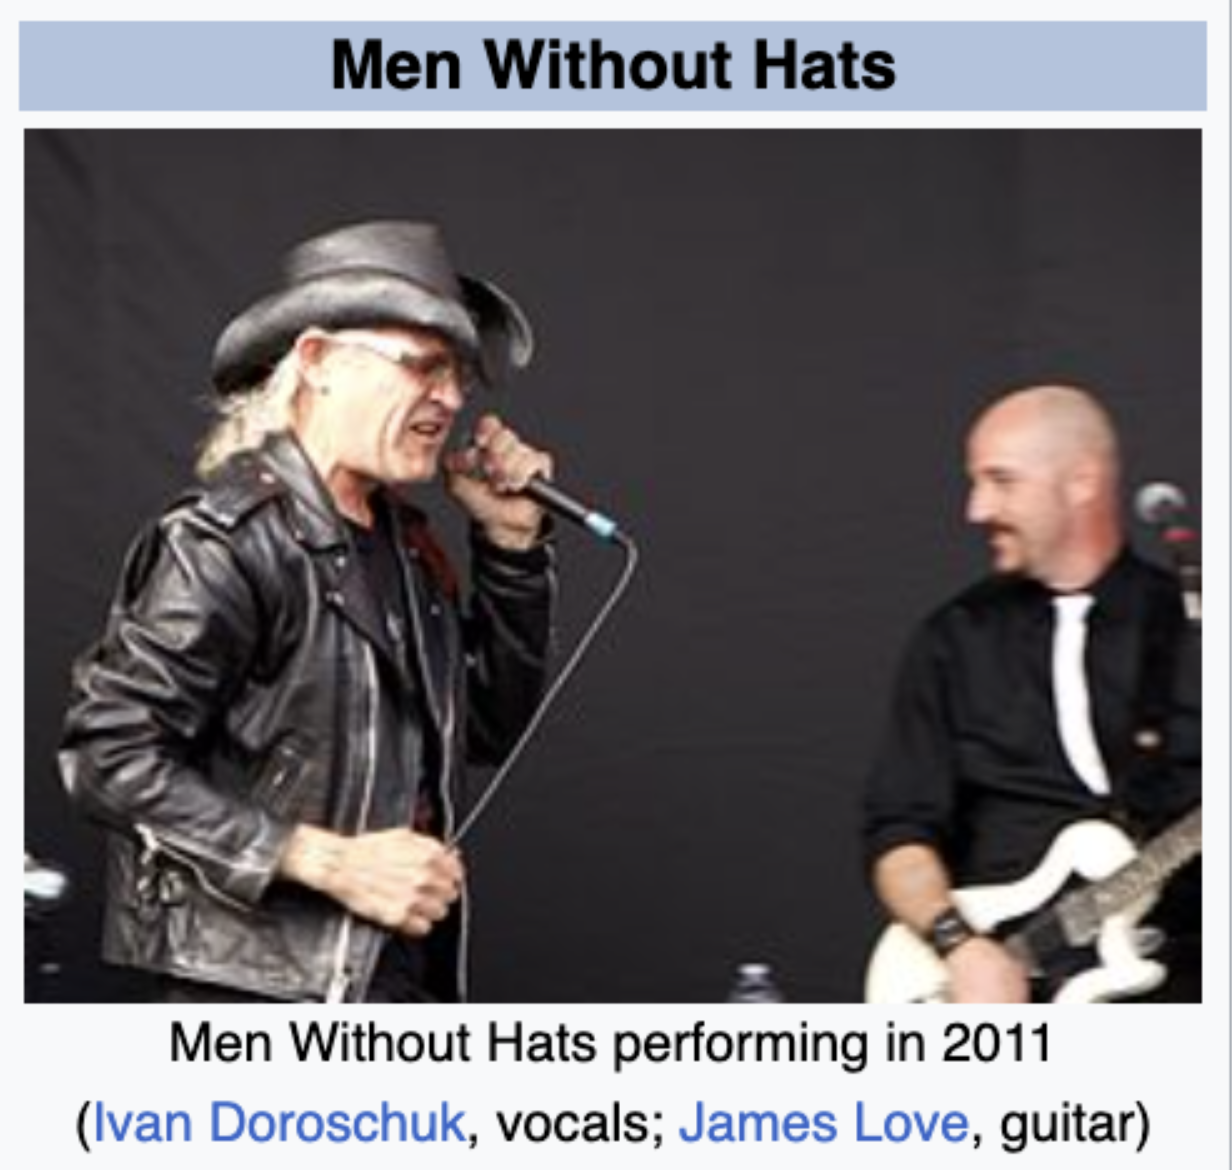 Dumb pics - men without hats wearing hats - Men Without Hats Men Without Hats performing in